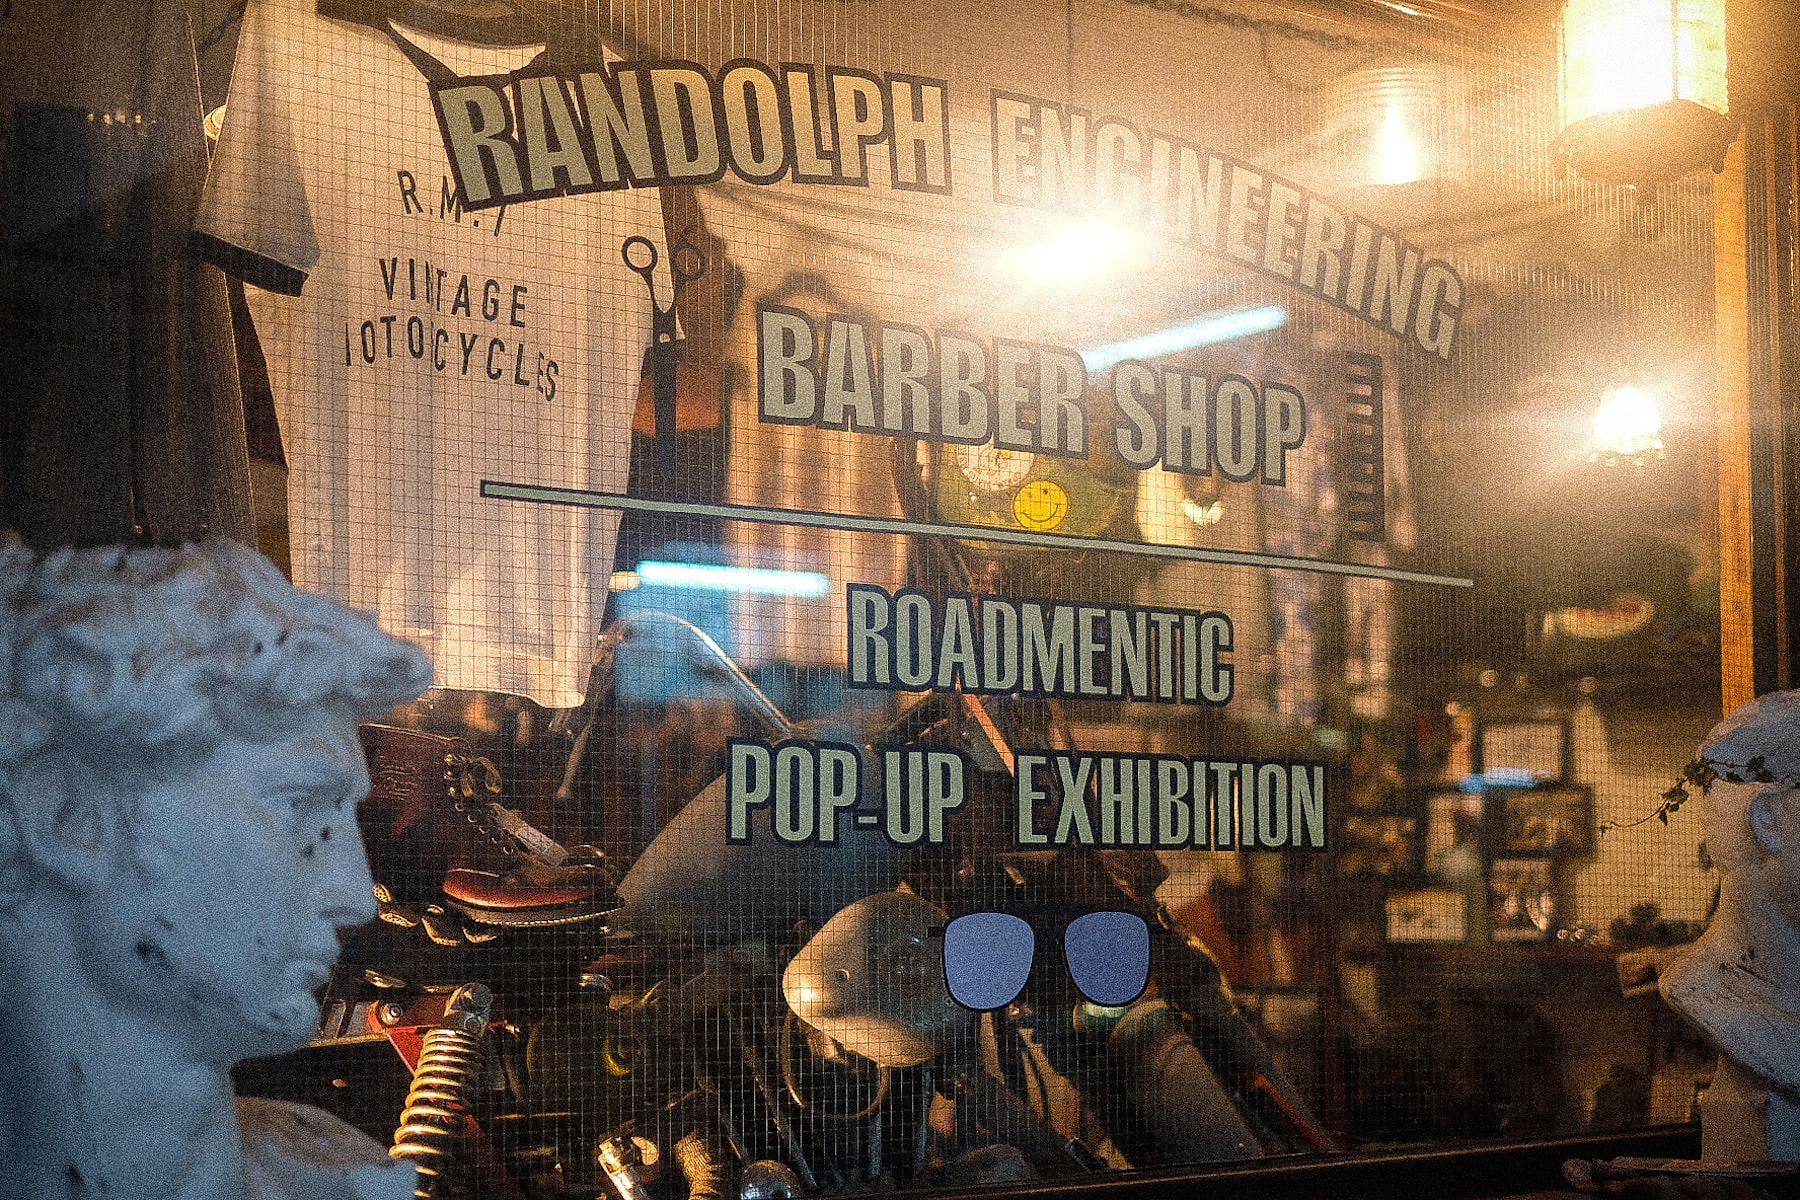 走進 Roadmentic x Randolph Engineering® 45 週年期間限定 Barber Shop